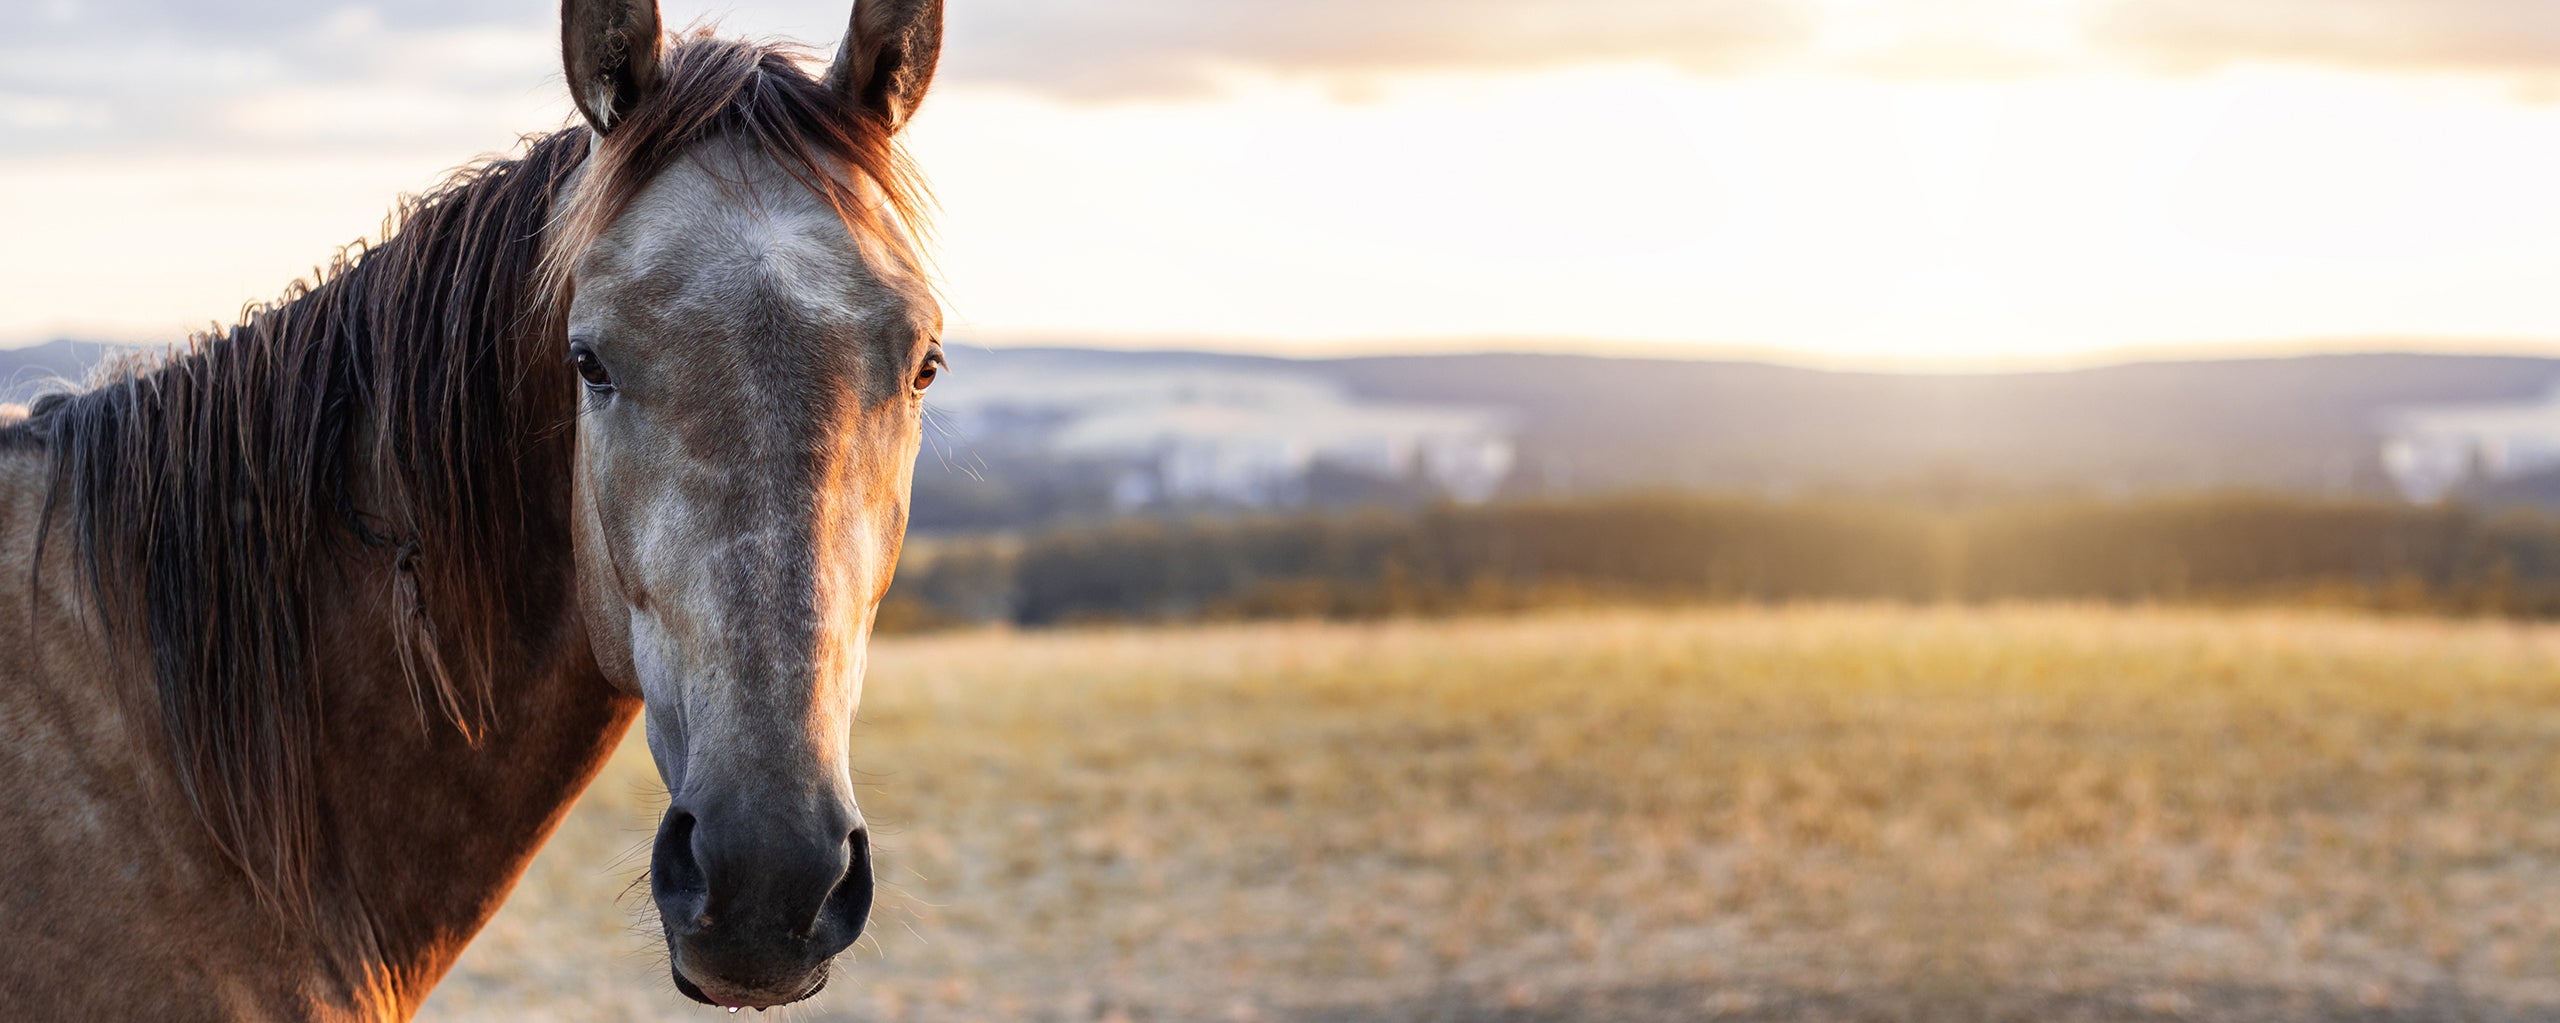 Pferd auf dem Feld bei Sonnenuntergang